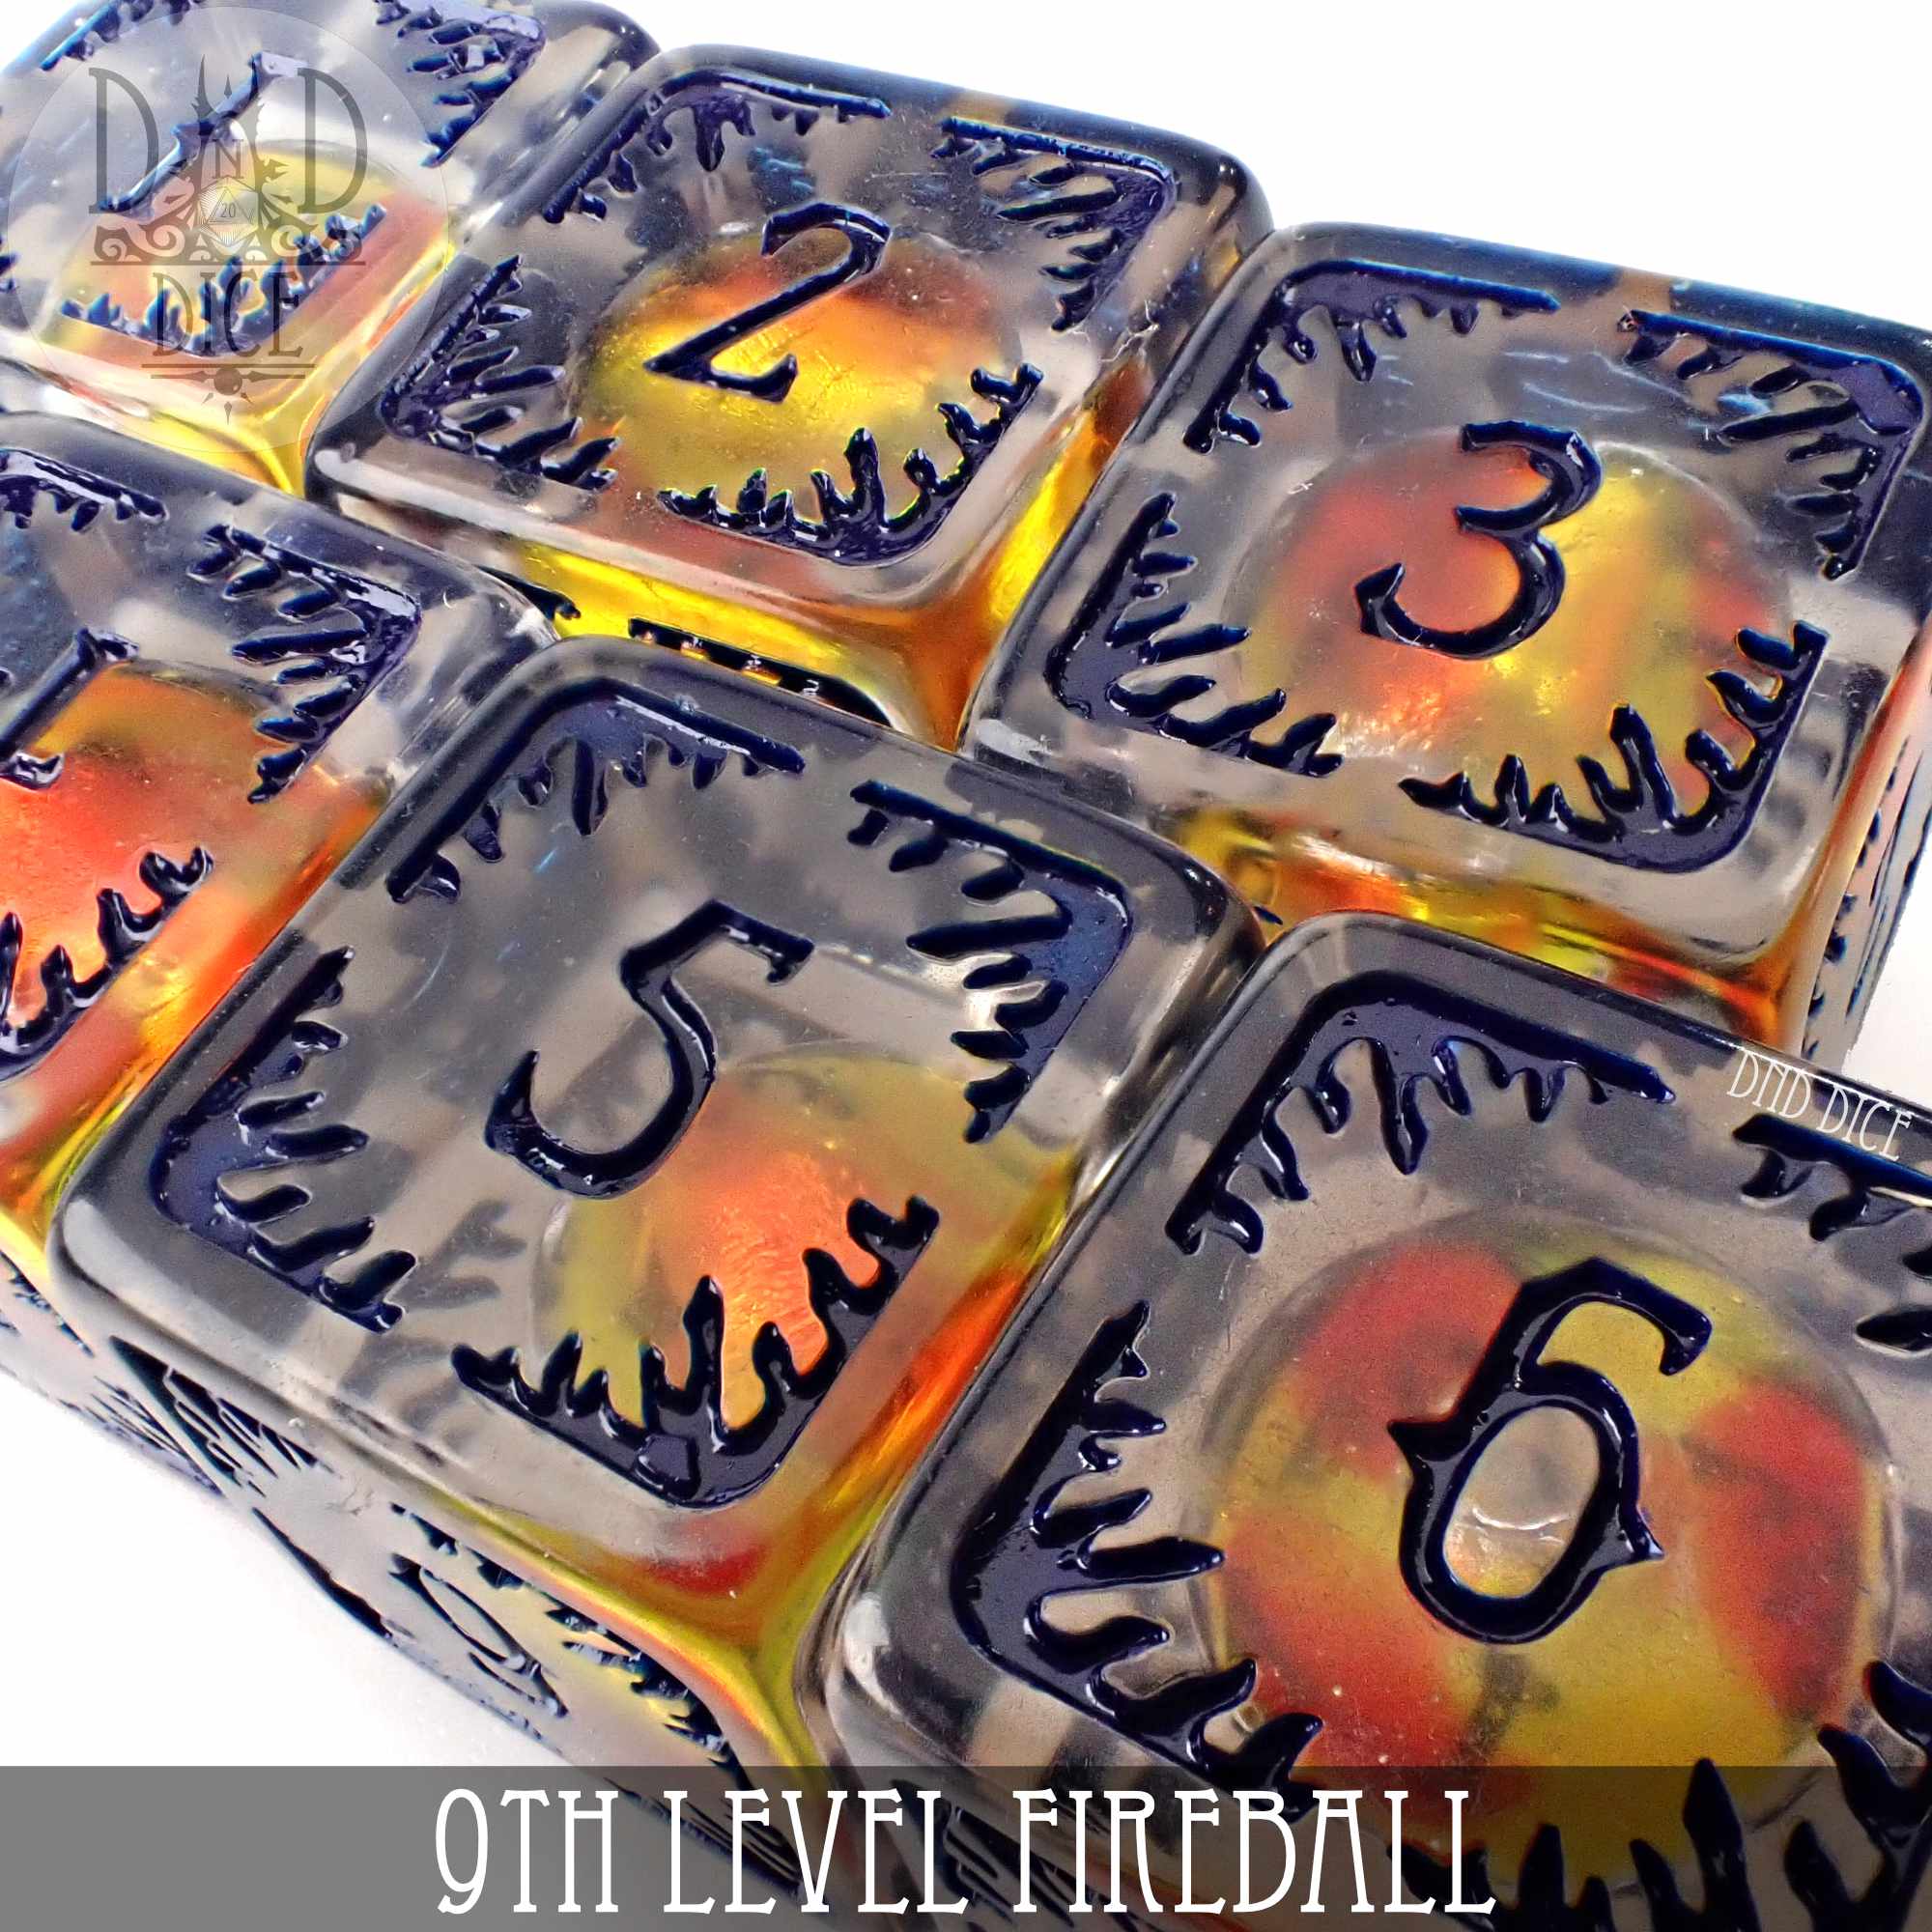 9th Level Fireball 14 Dice Set